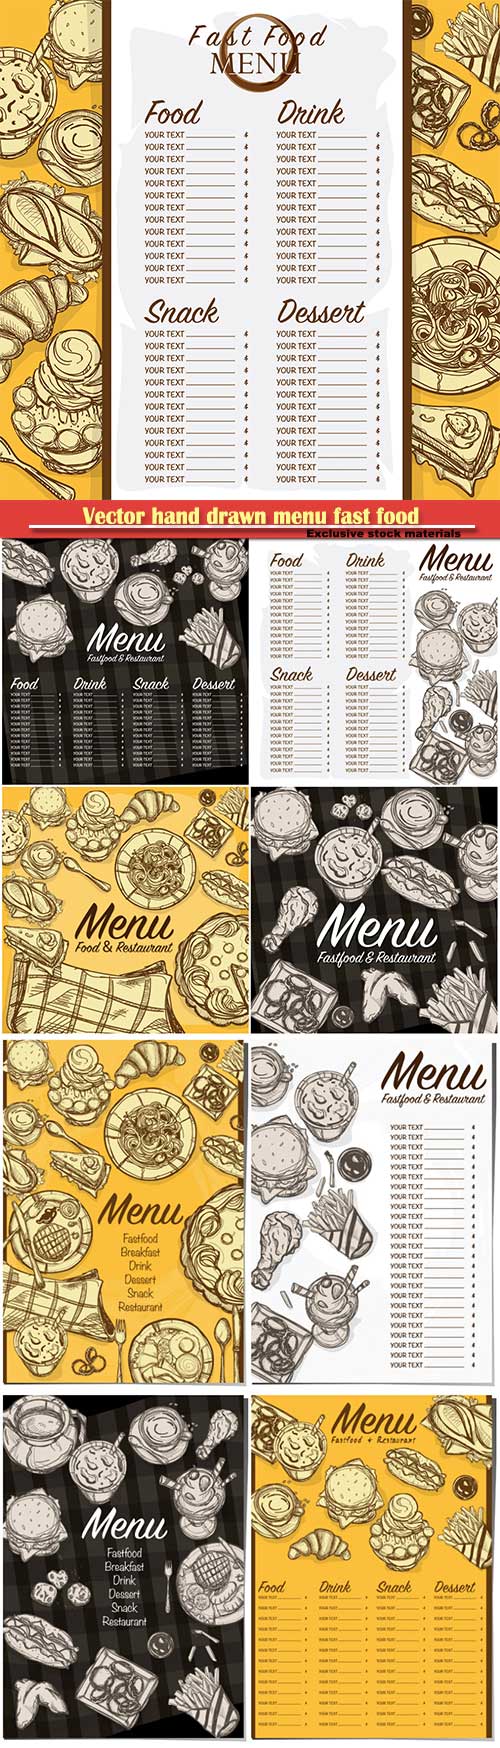 Vector hand drawn menu fast food restaurant template design